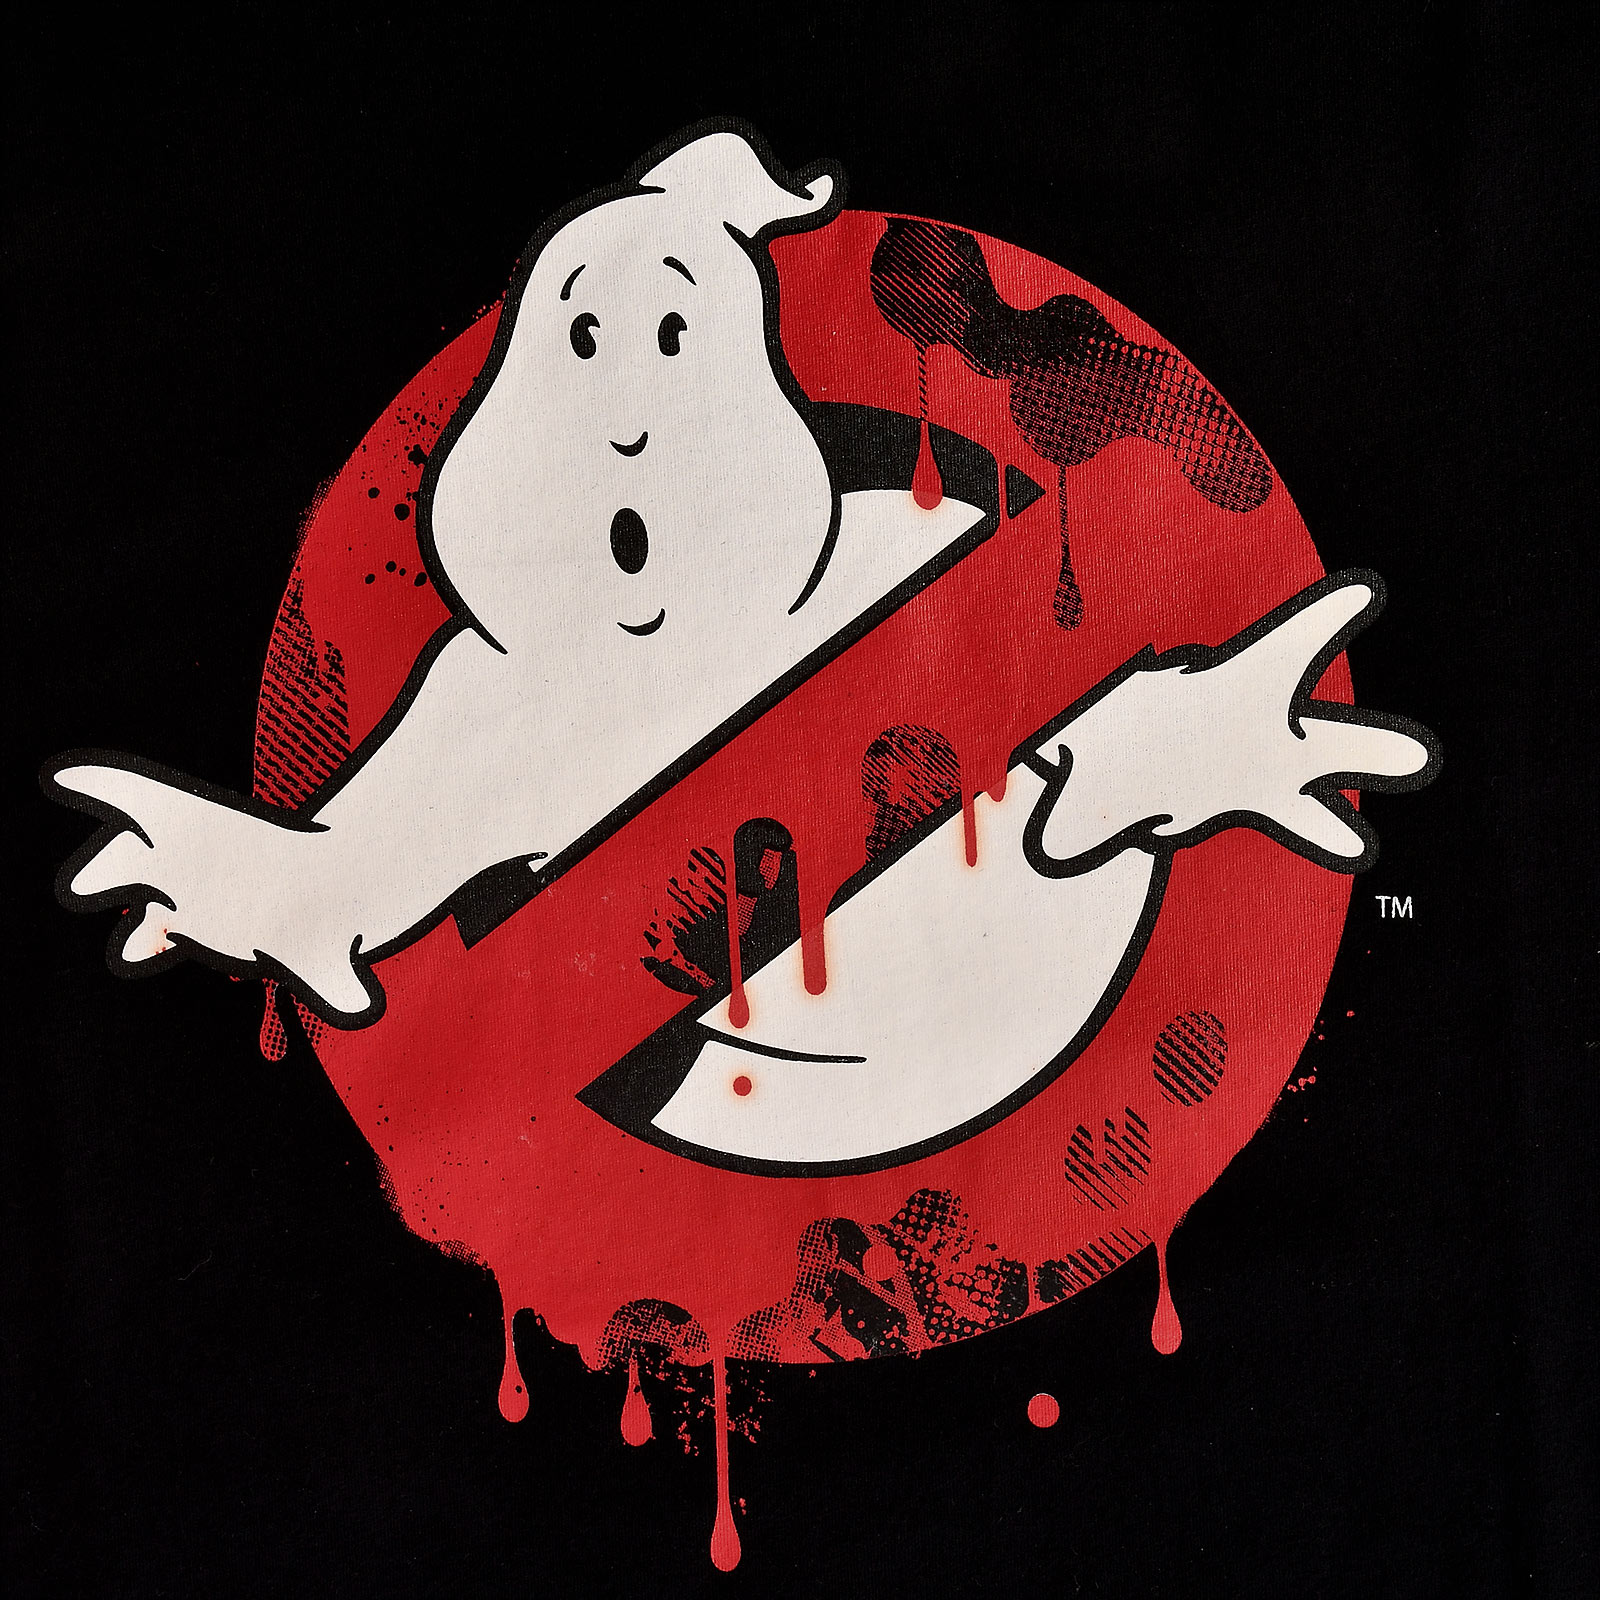 Ghostbusters - Glow in the Dark Logo T-Shirt Black